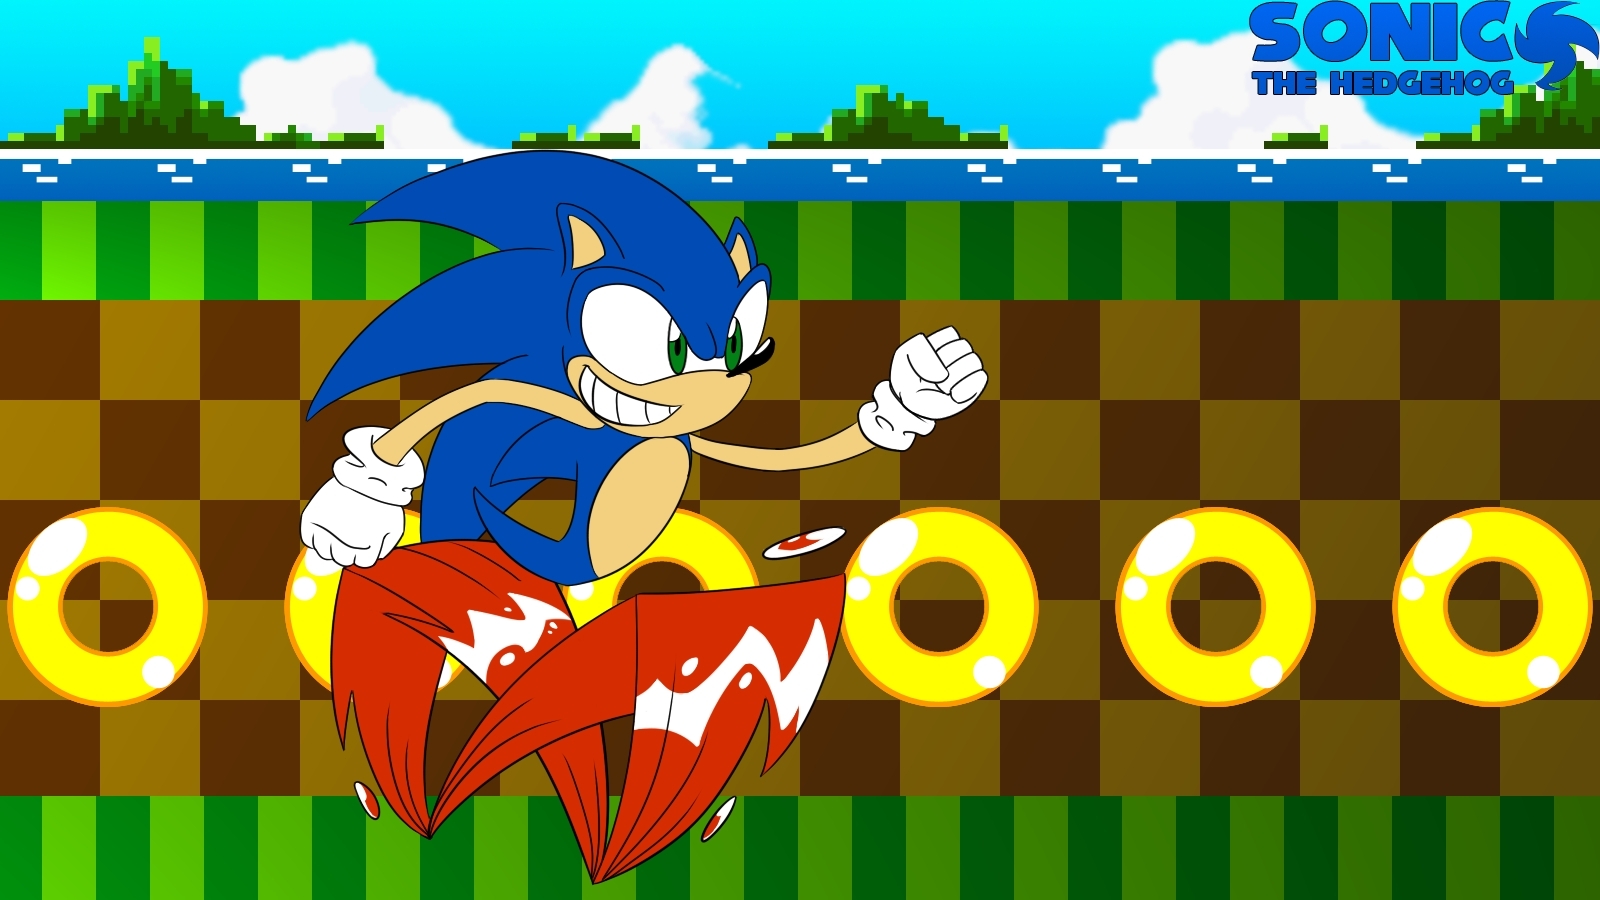 Sonic the Hedgehog 2 Jeu IOS   Images vidos astuces et avis